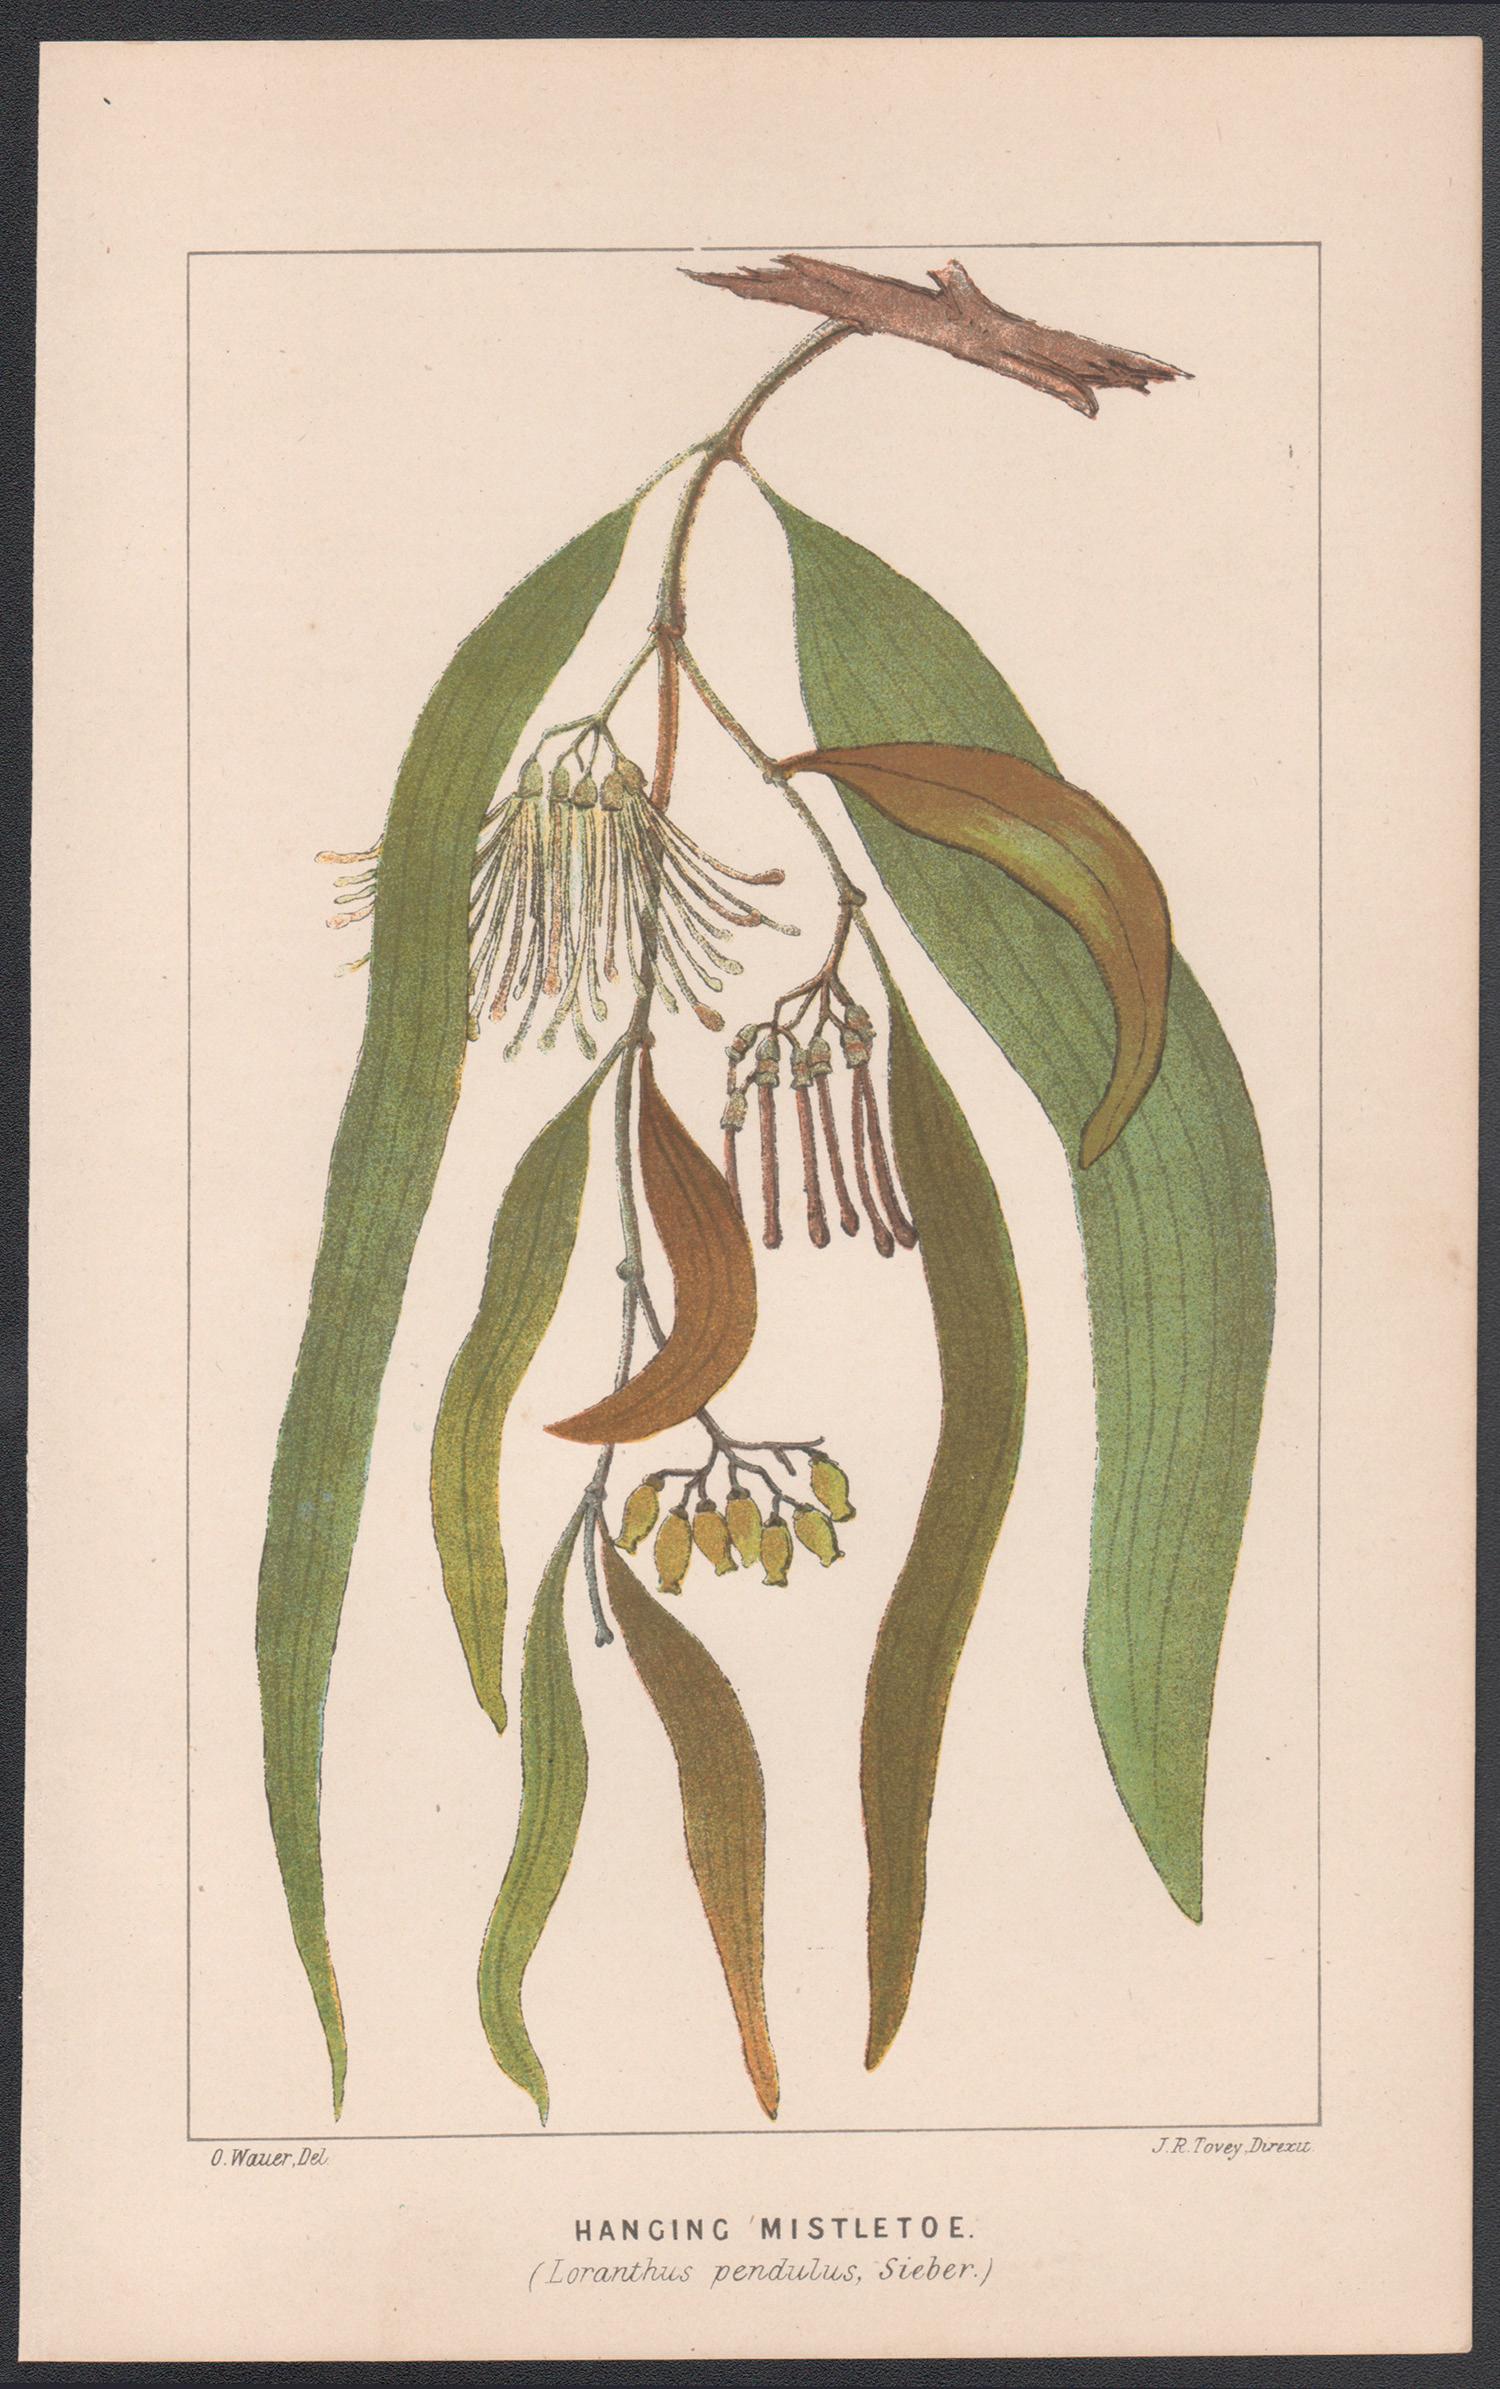 Hanging Mistletoe (Loranthus pendulus), antique botanical plant lithograph - Print by O Wauer